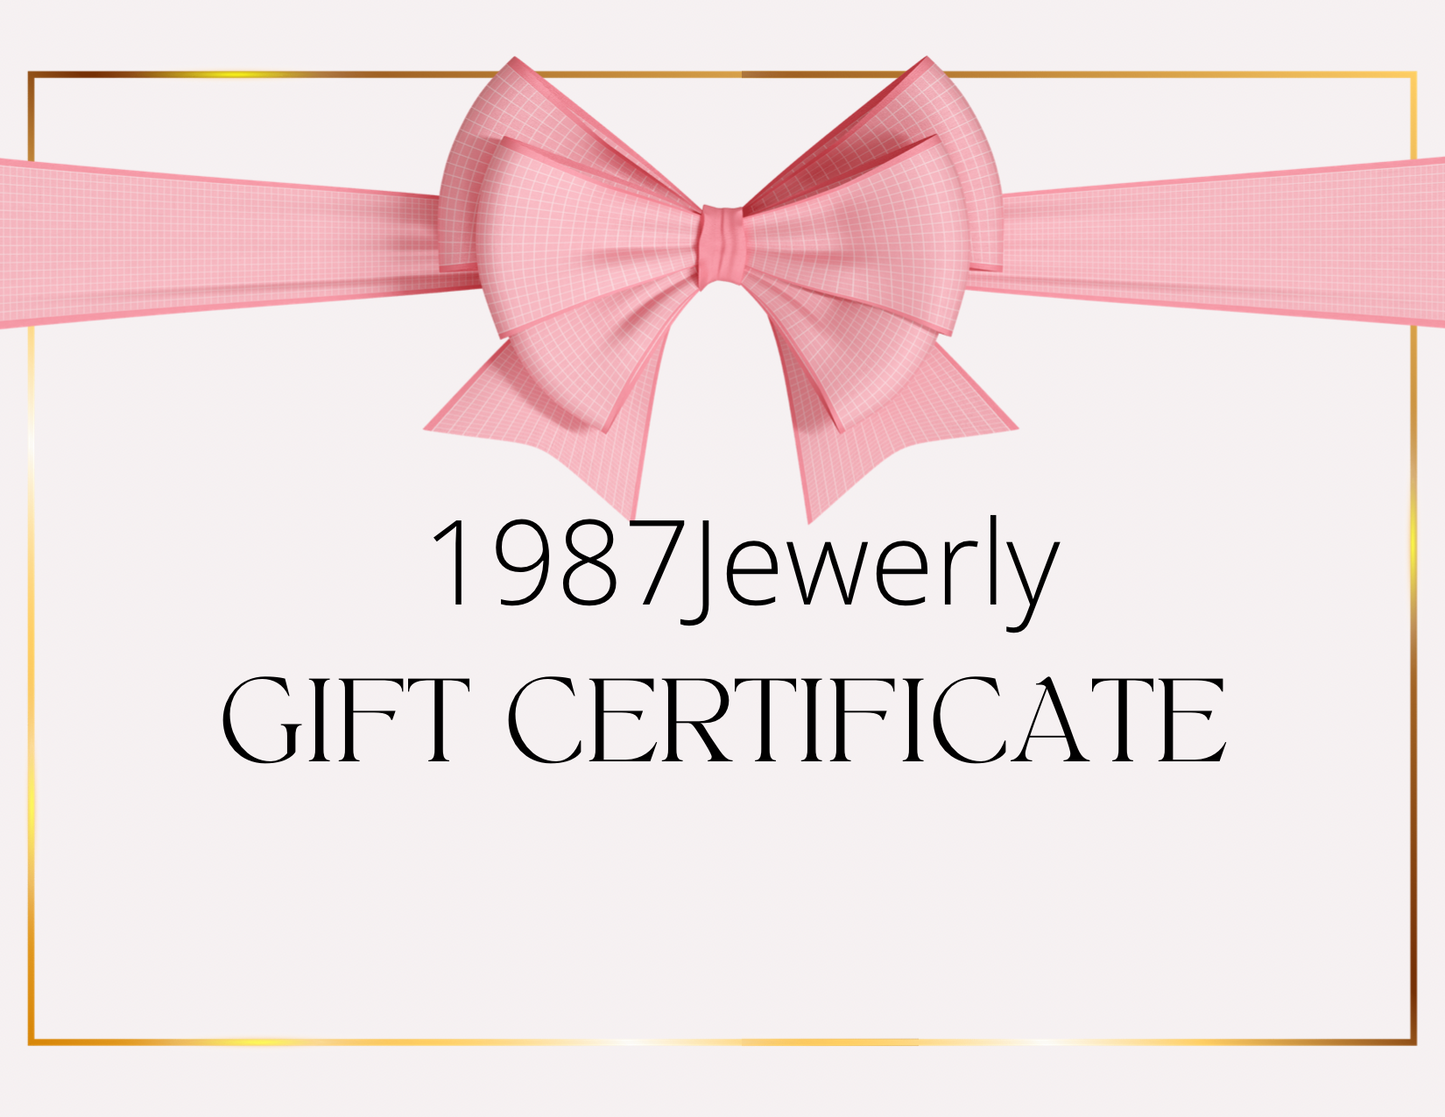 1987 jewerly Gift Certificate